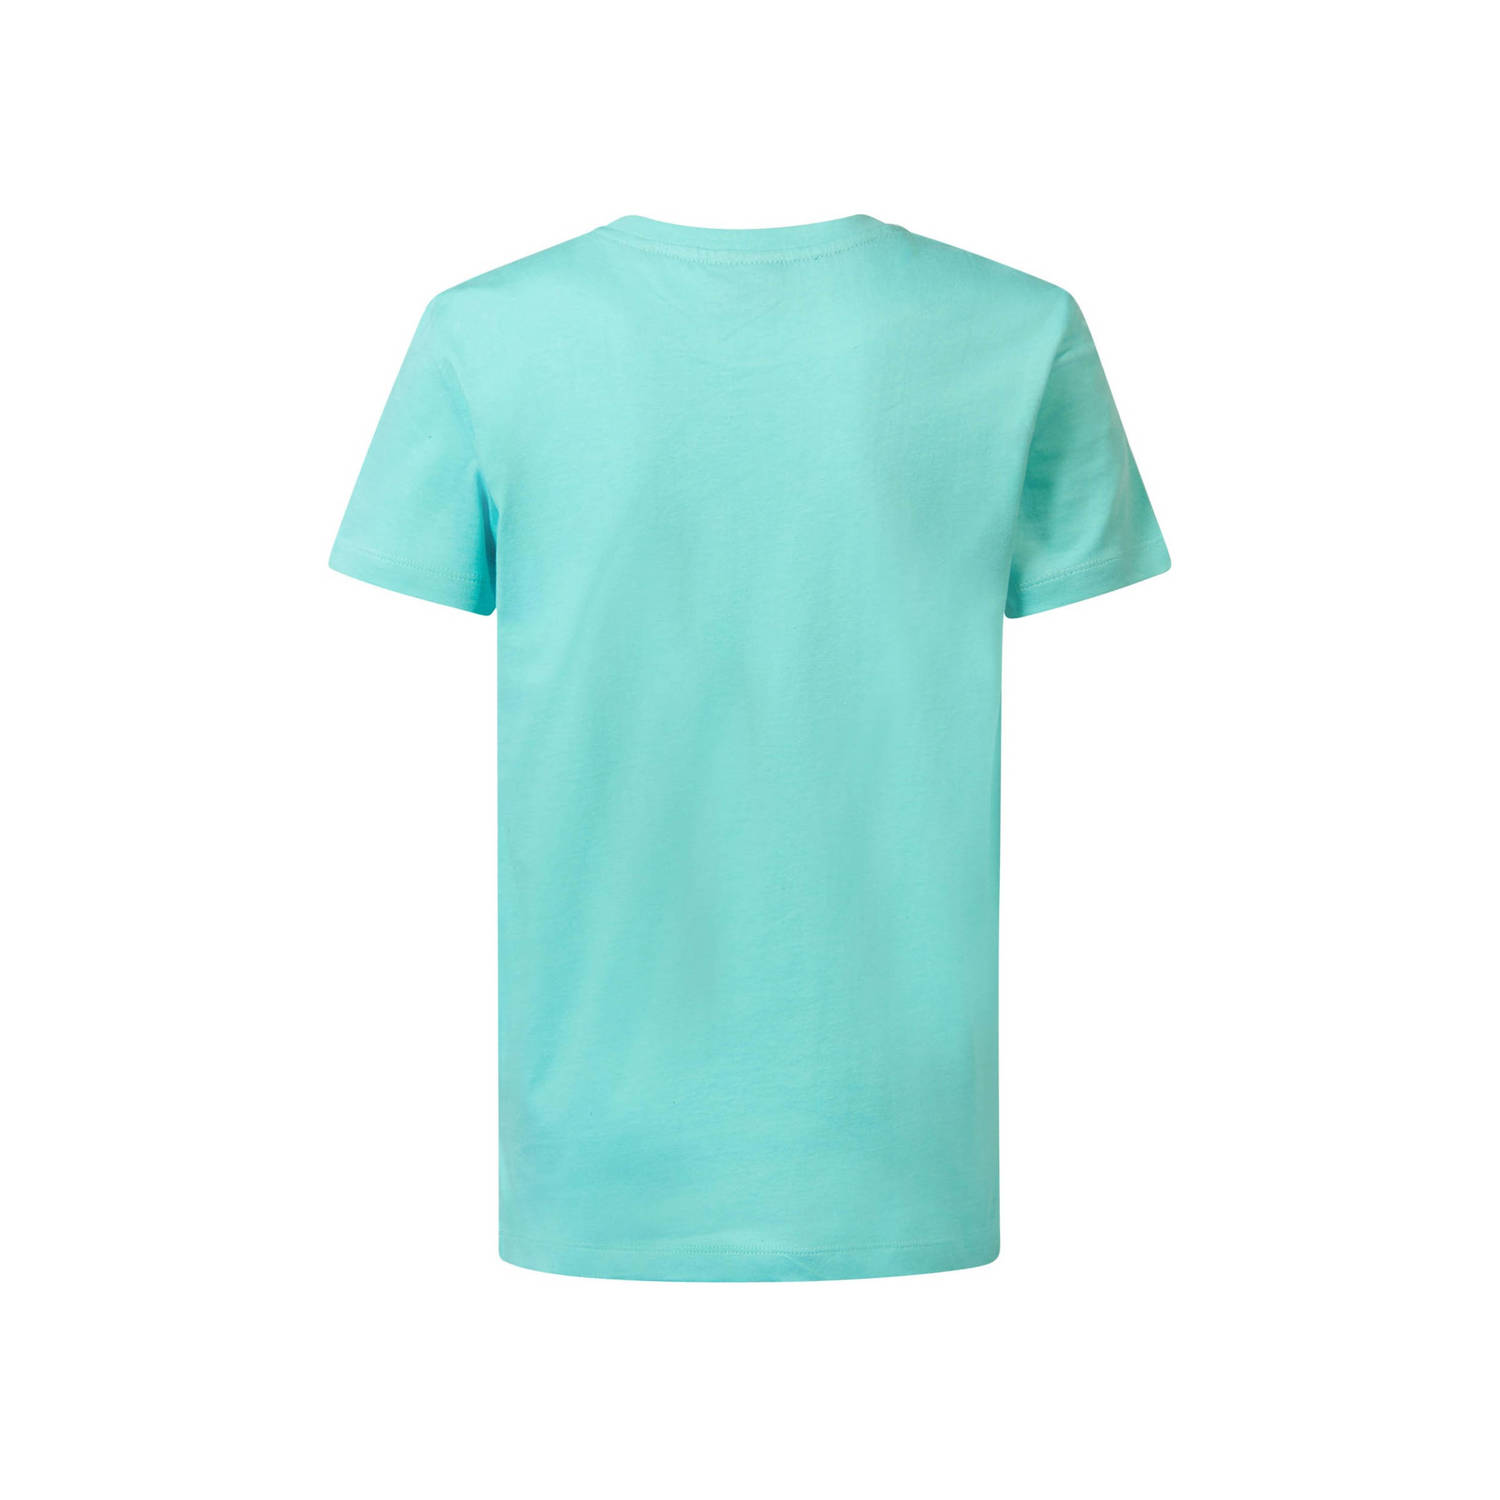 Petrol Industries T-shirt aqua blauw